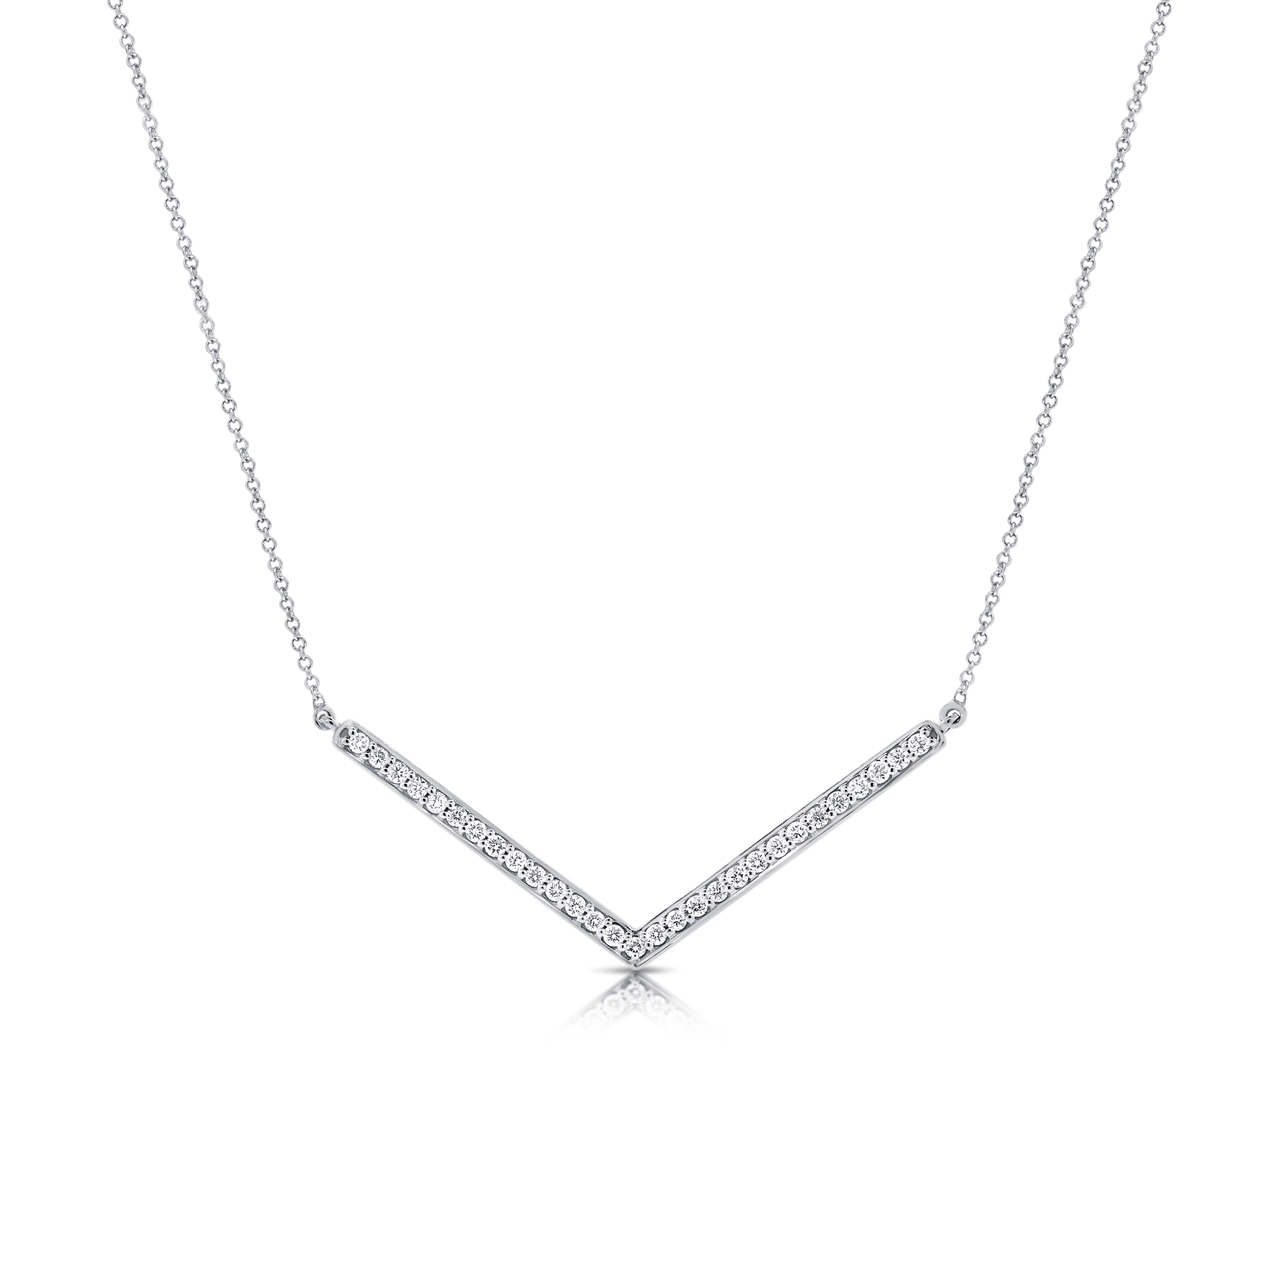 Minimalist v-shaped diamond and white gold necklace.